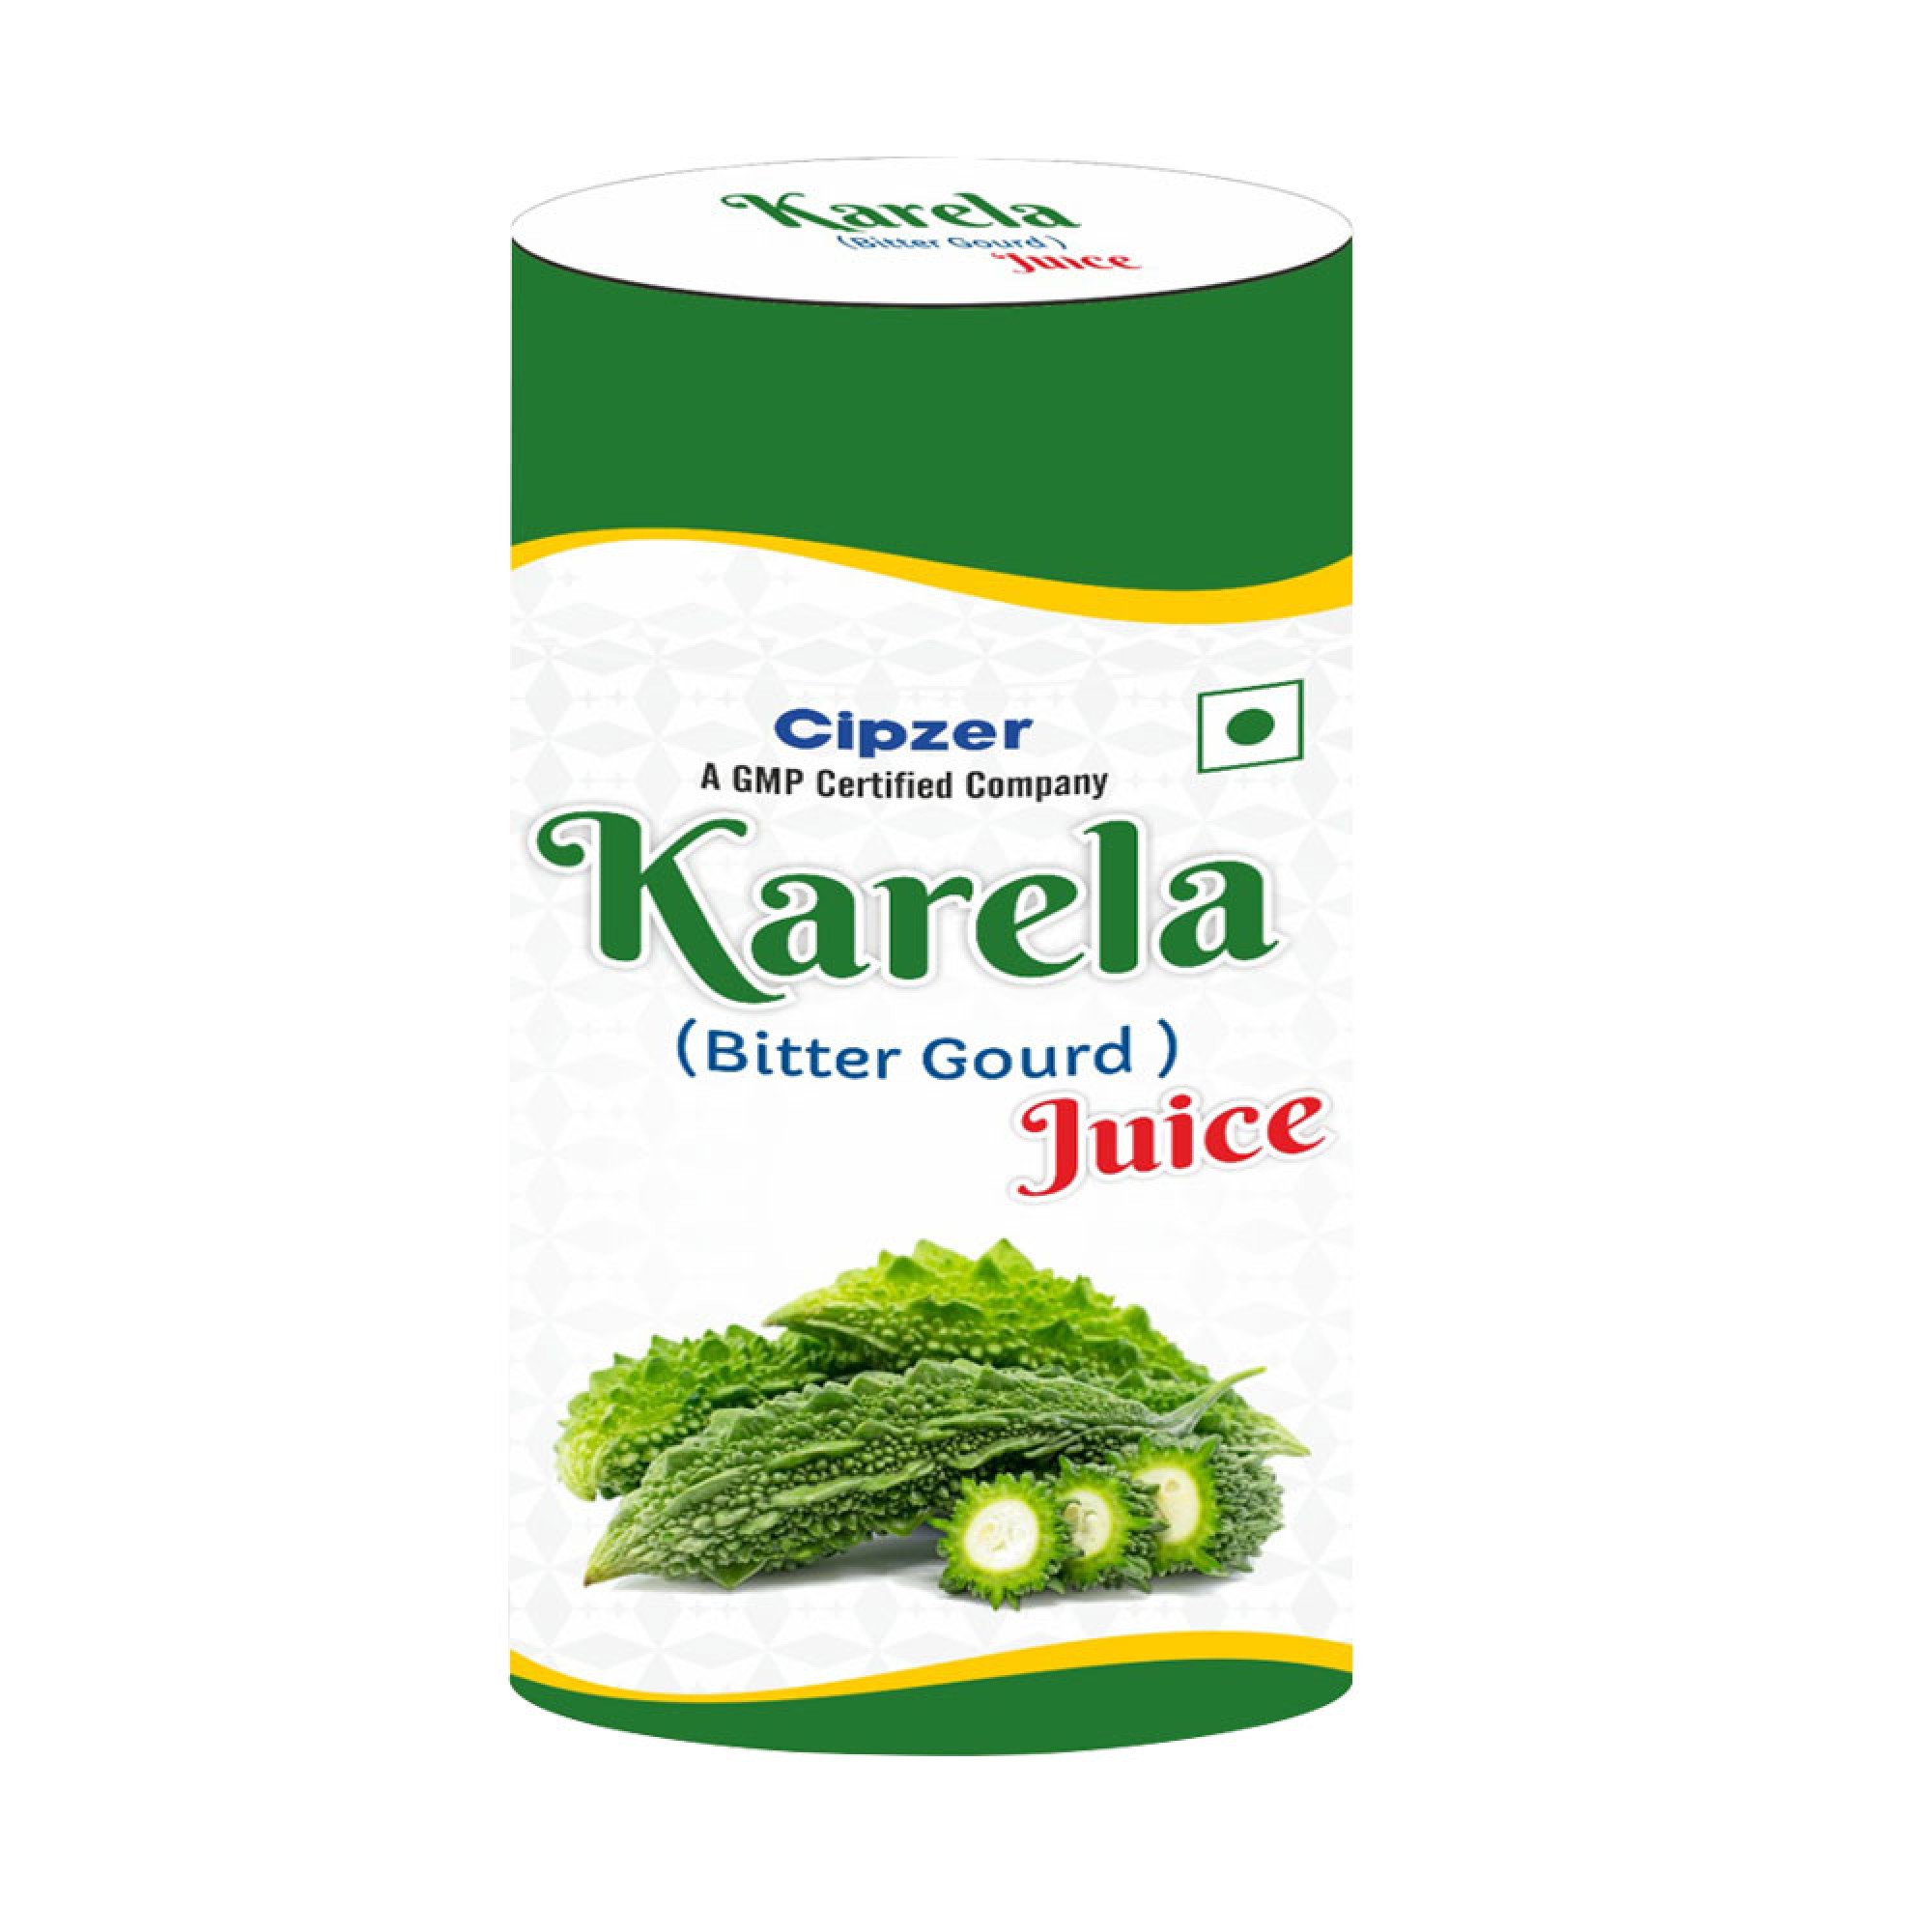 Cipzer Karela Juice